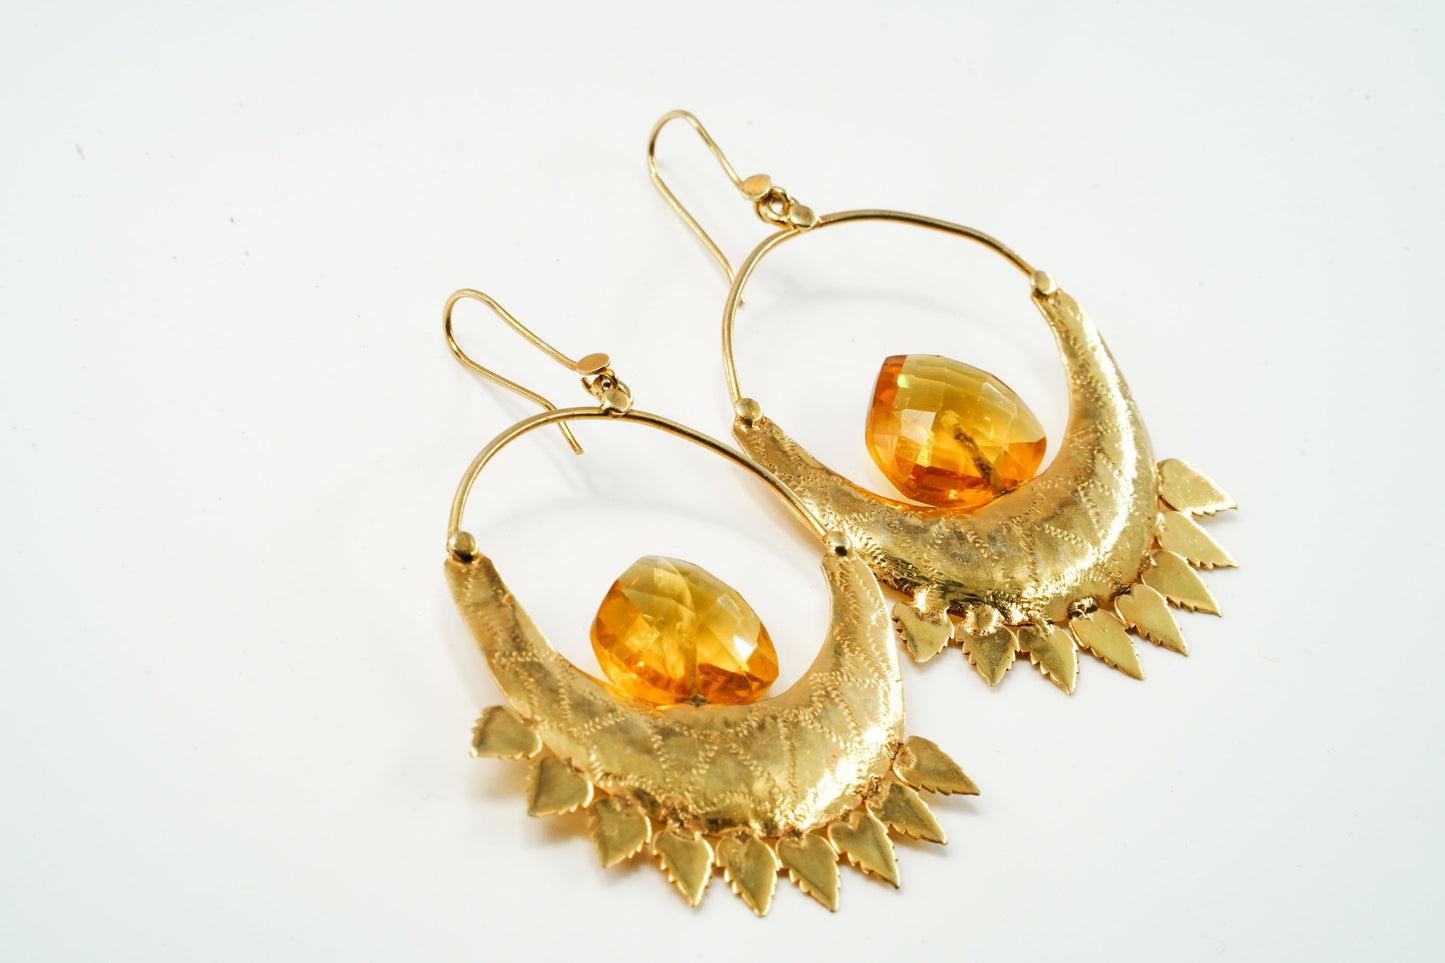 Gold Half Moon Earring with Yellow Stone - Neeta Boochra Jewellery